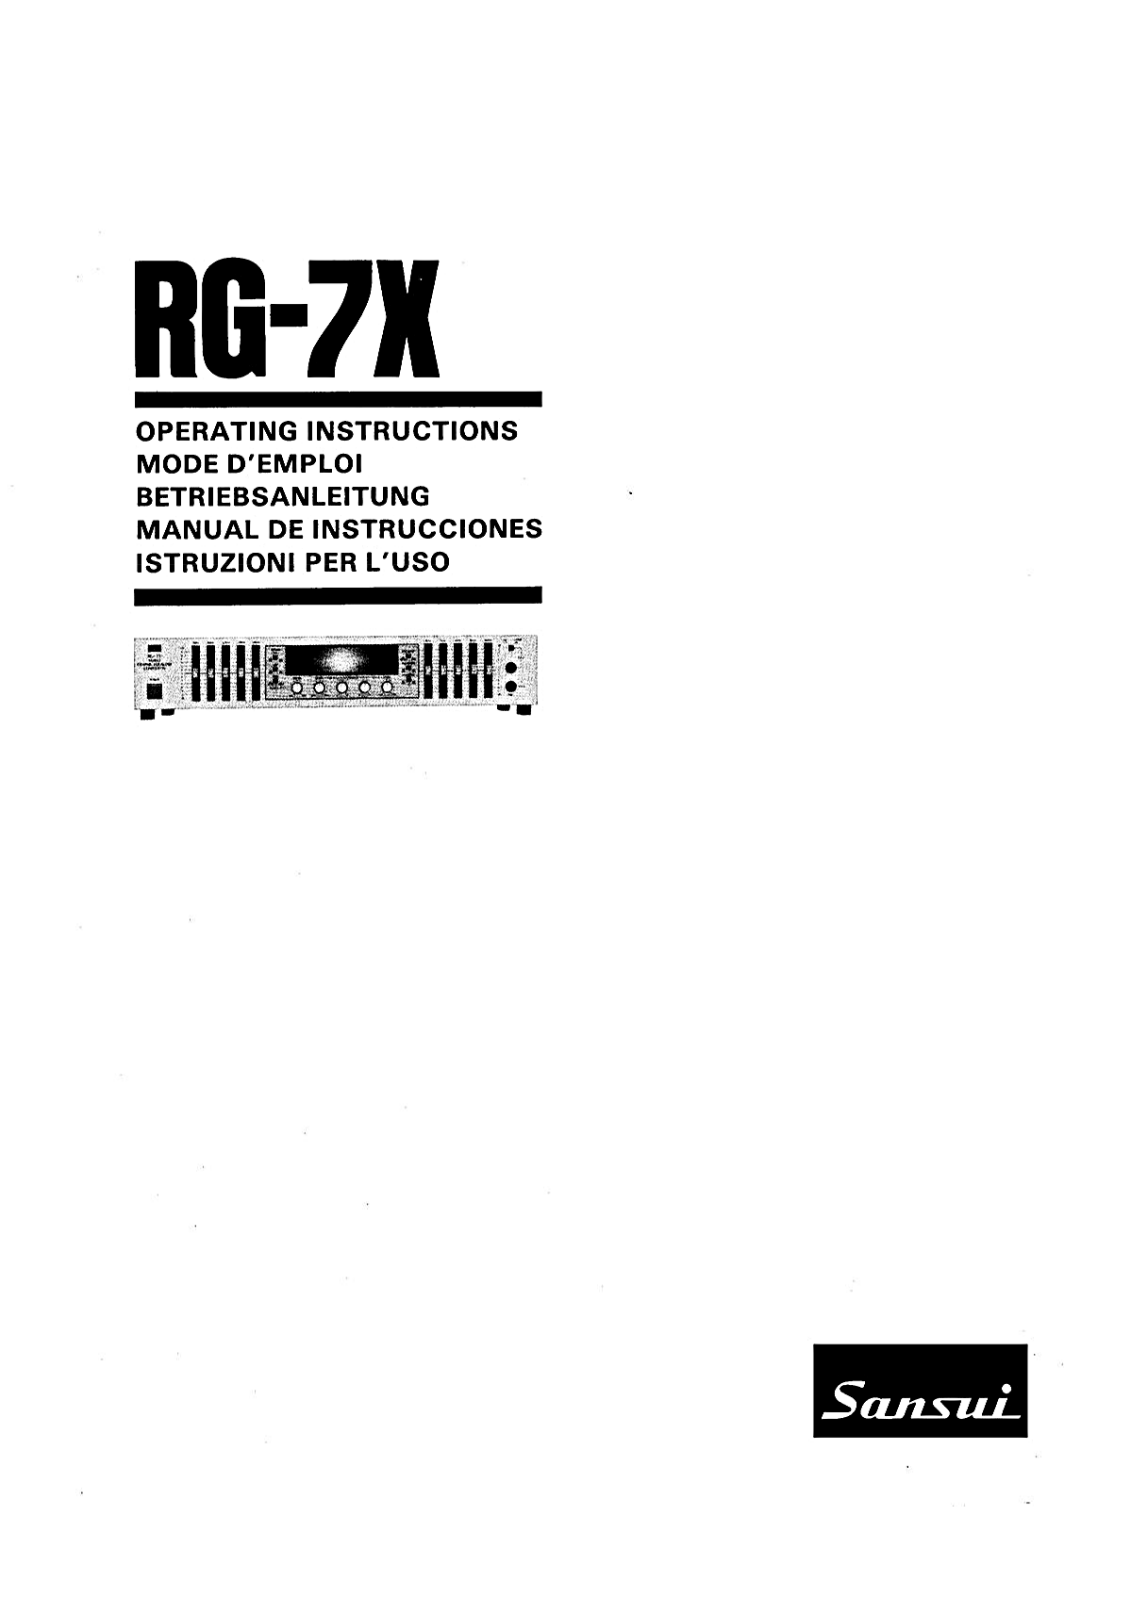 Sansui RG-7X Owners Manual